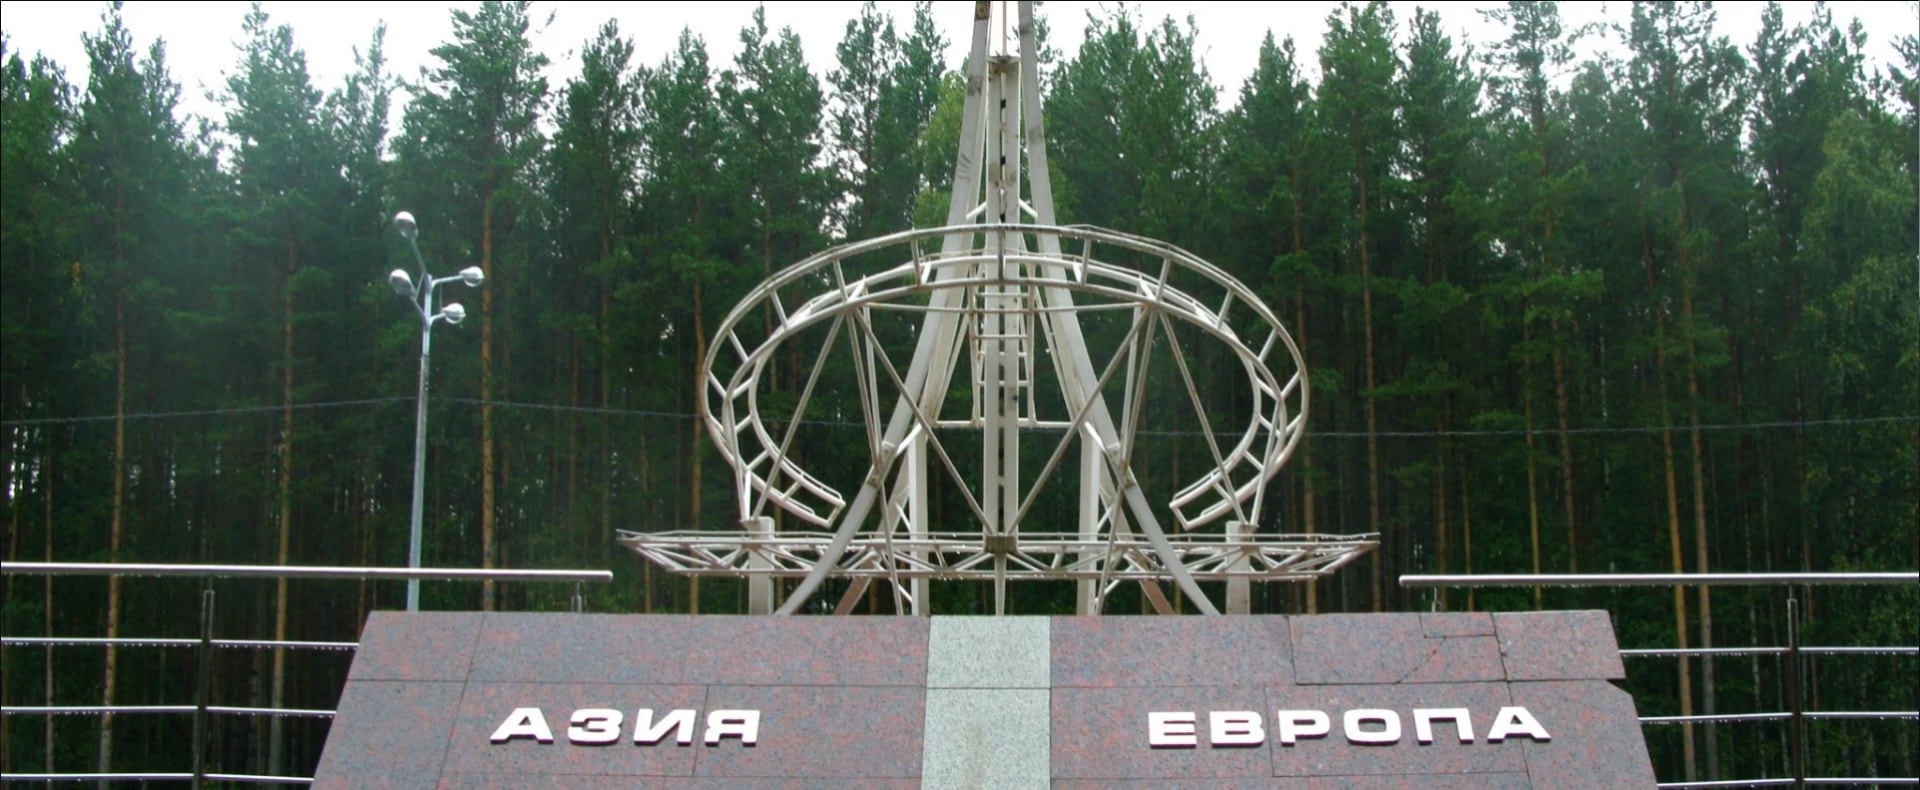 Europe - Asia Obelisk, Ekaterinburg